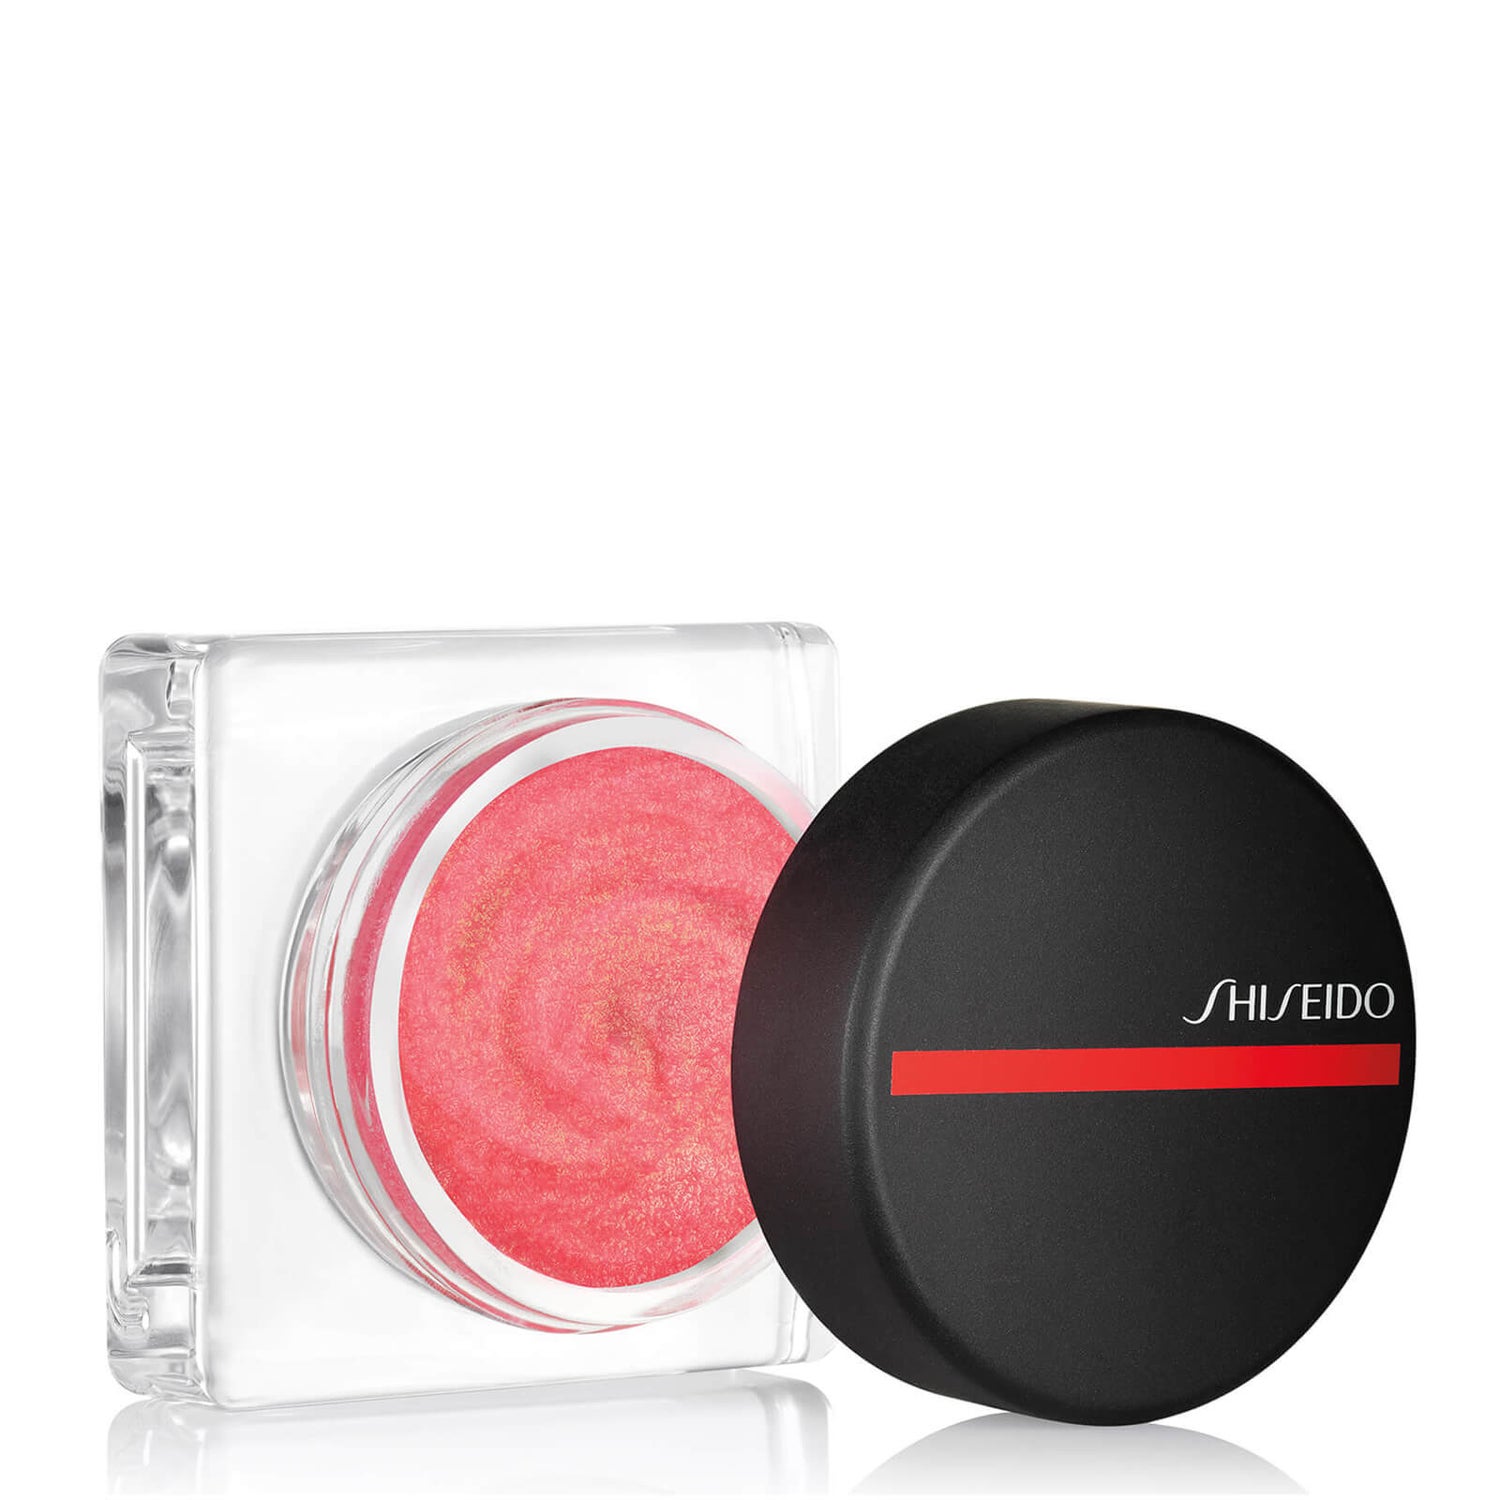 Blush Minimalist Whipped Powder Shiseido (différentes teintes disponibles)